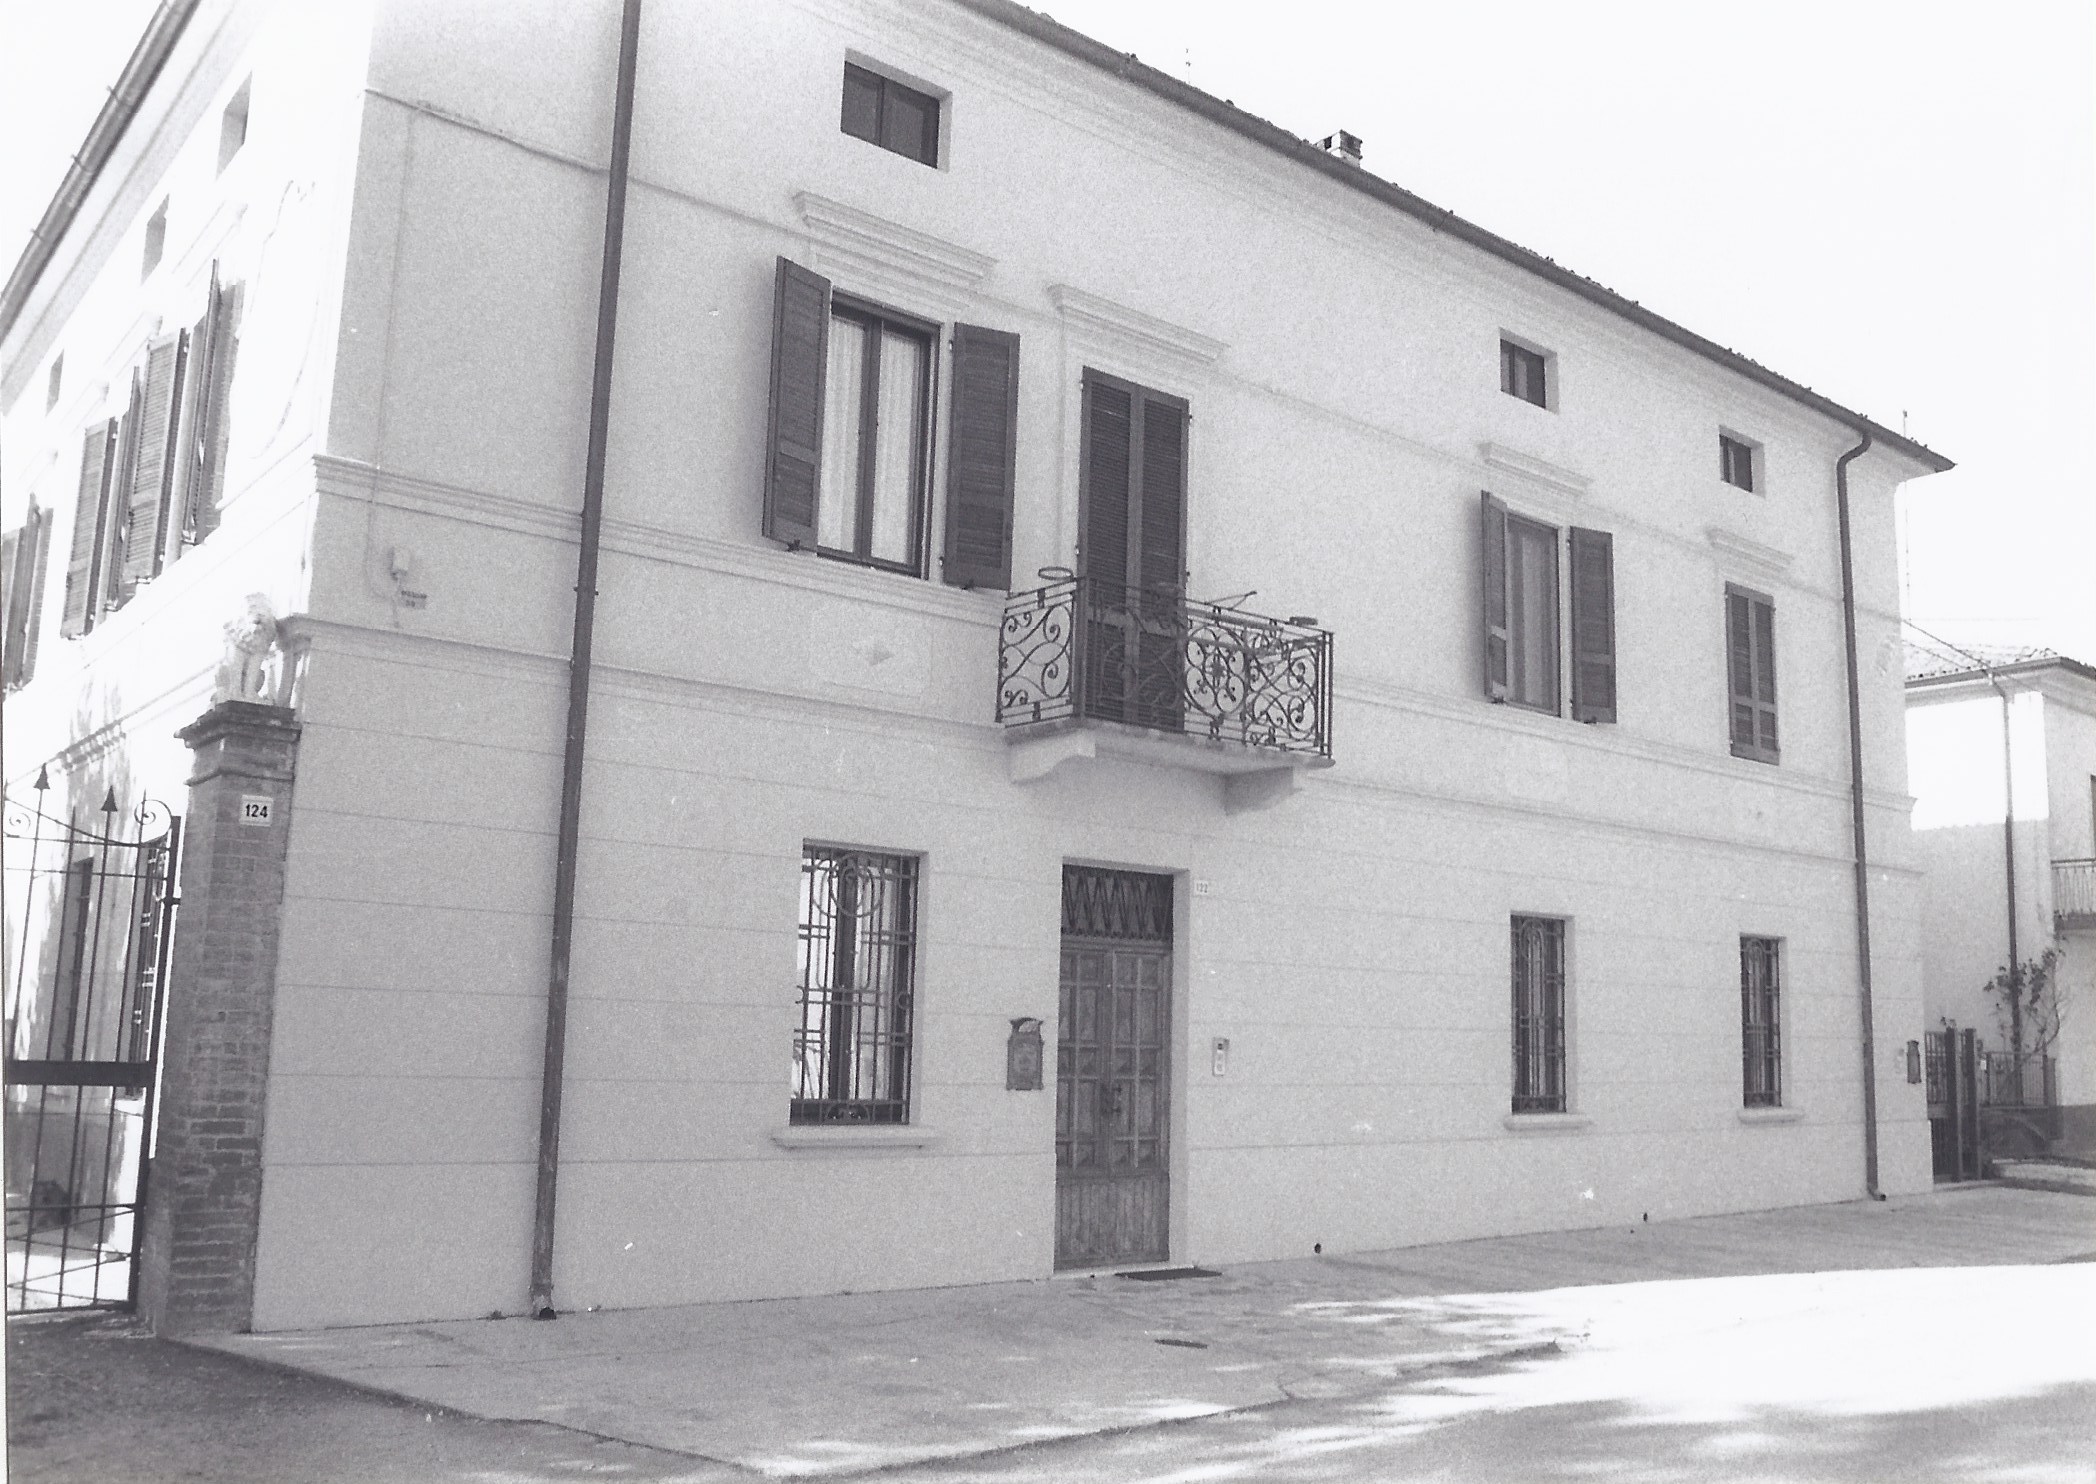 casa, padronale - Monticelli d'Ongina (PC)  (XIX)